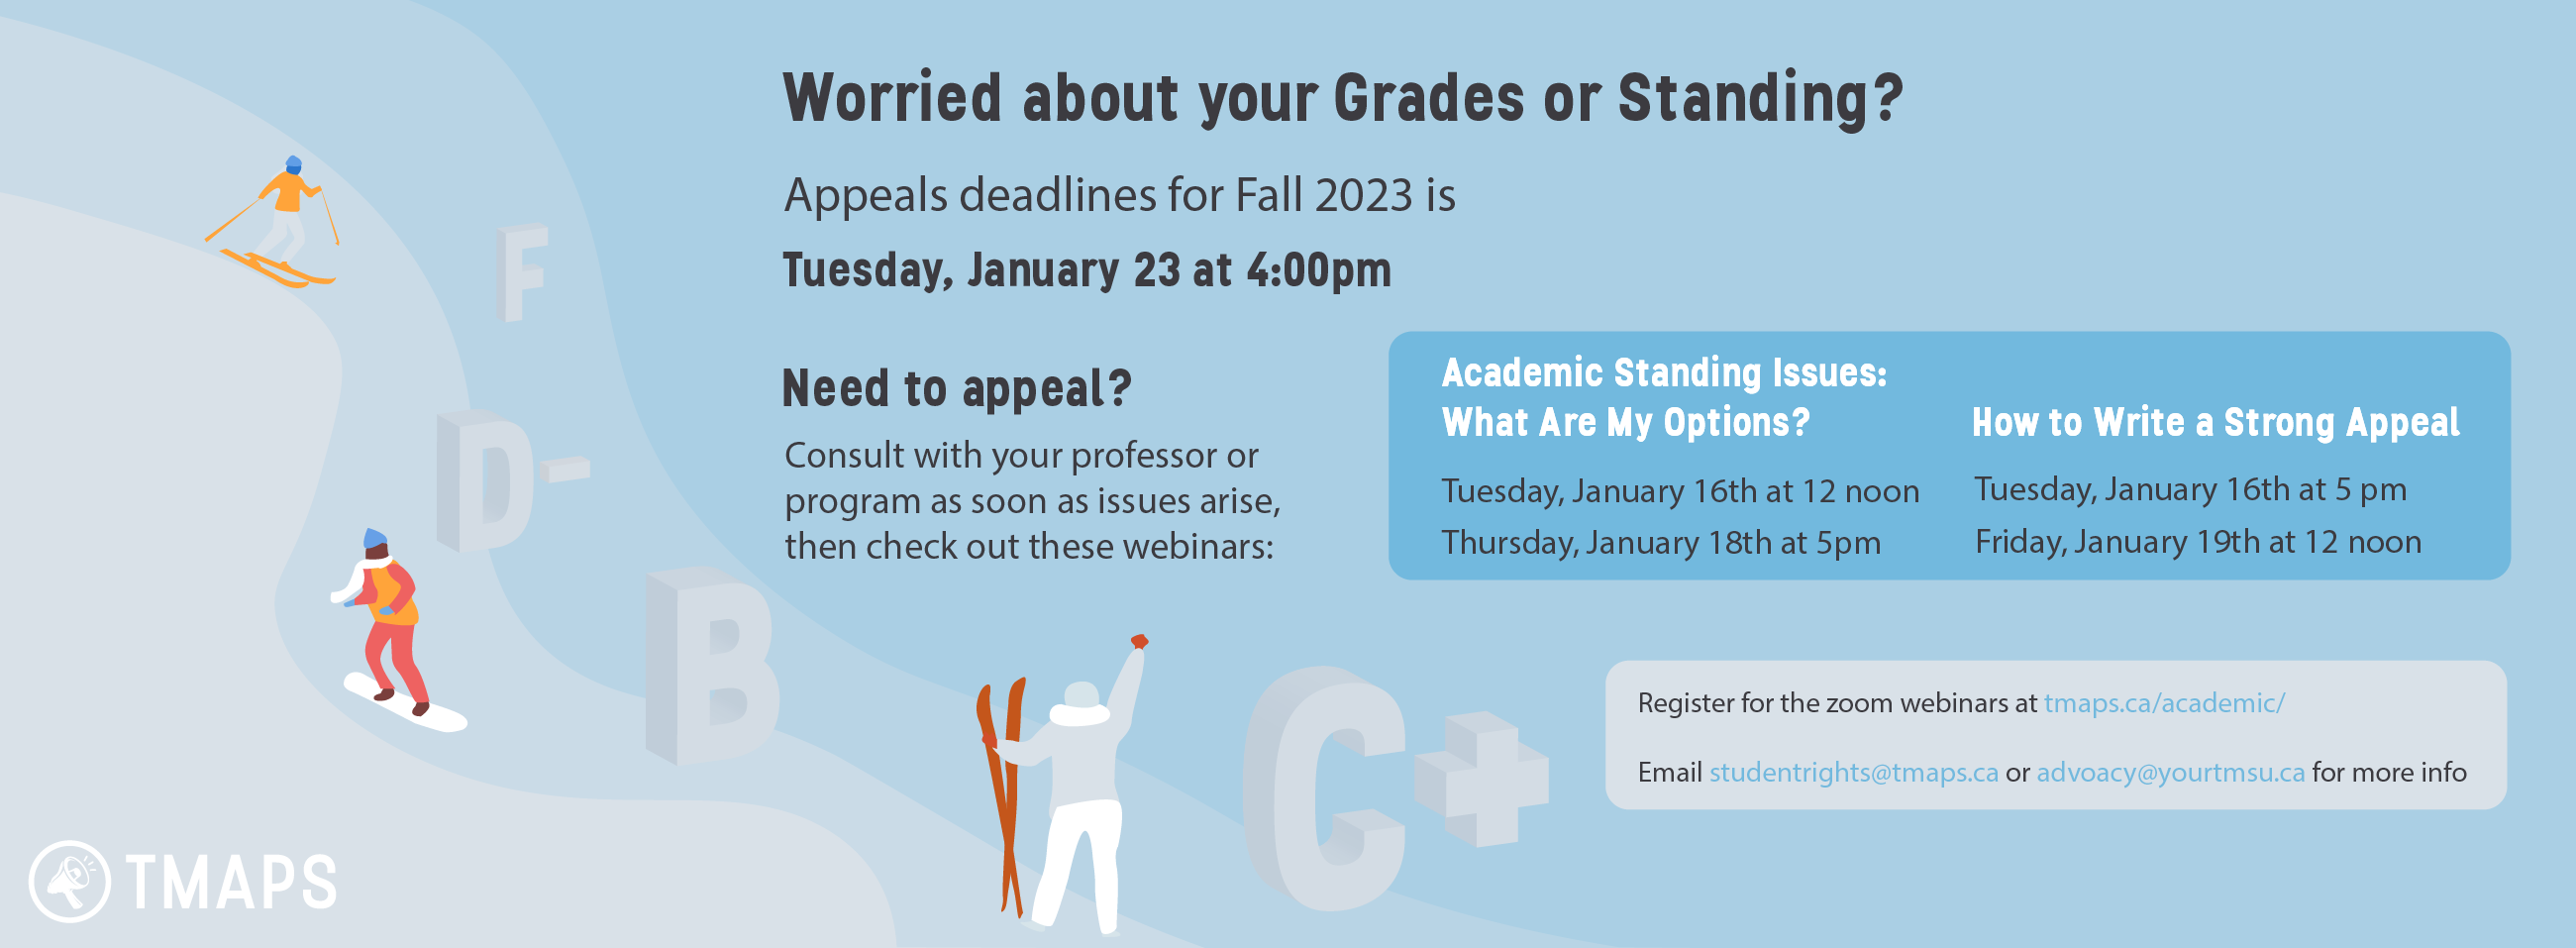 TMAPS Academic Workshop Information for Winter 2023 Appeals 